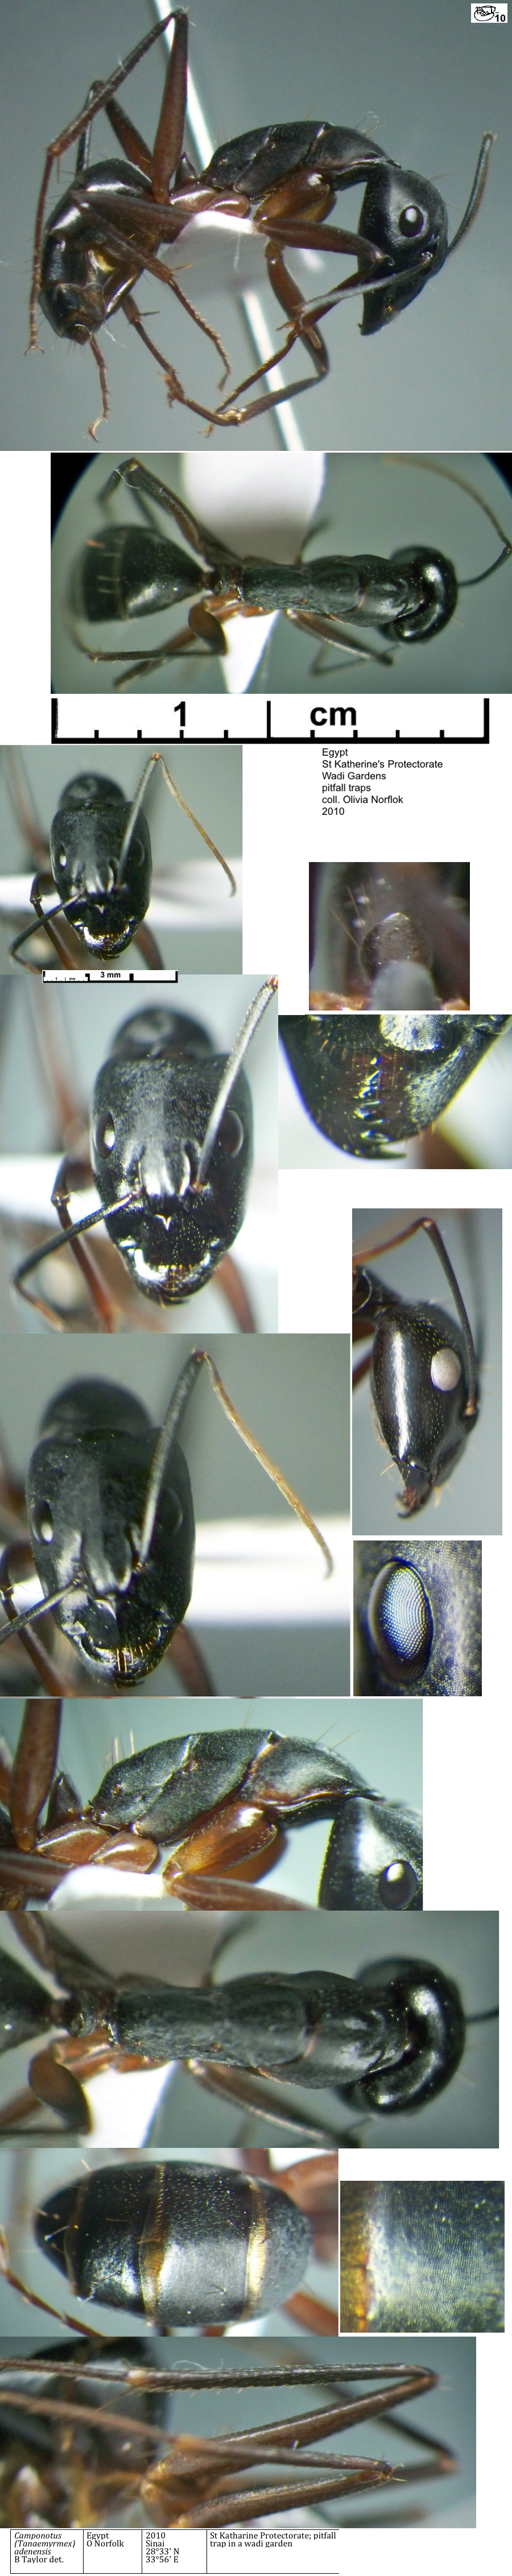 {Camponotus adenensis major}